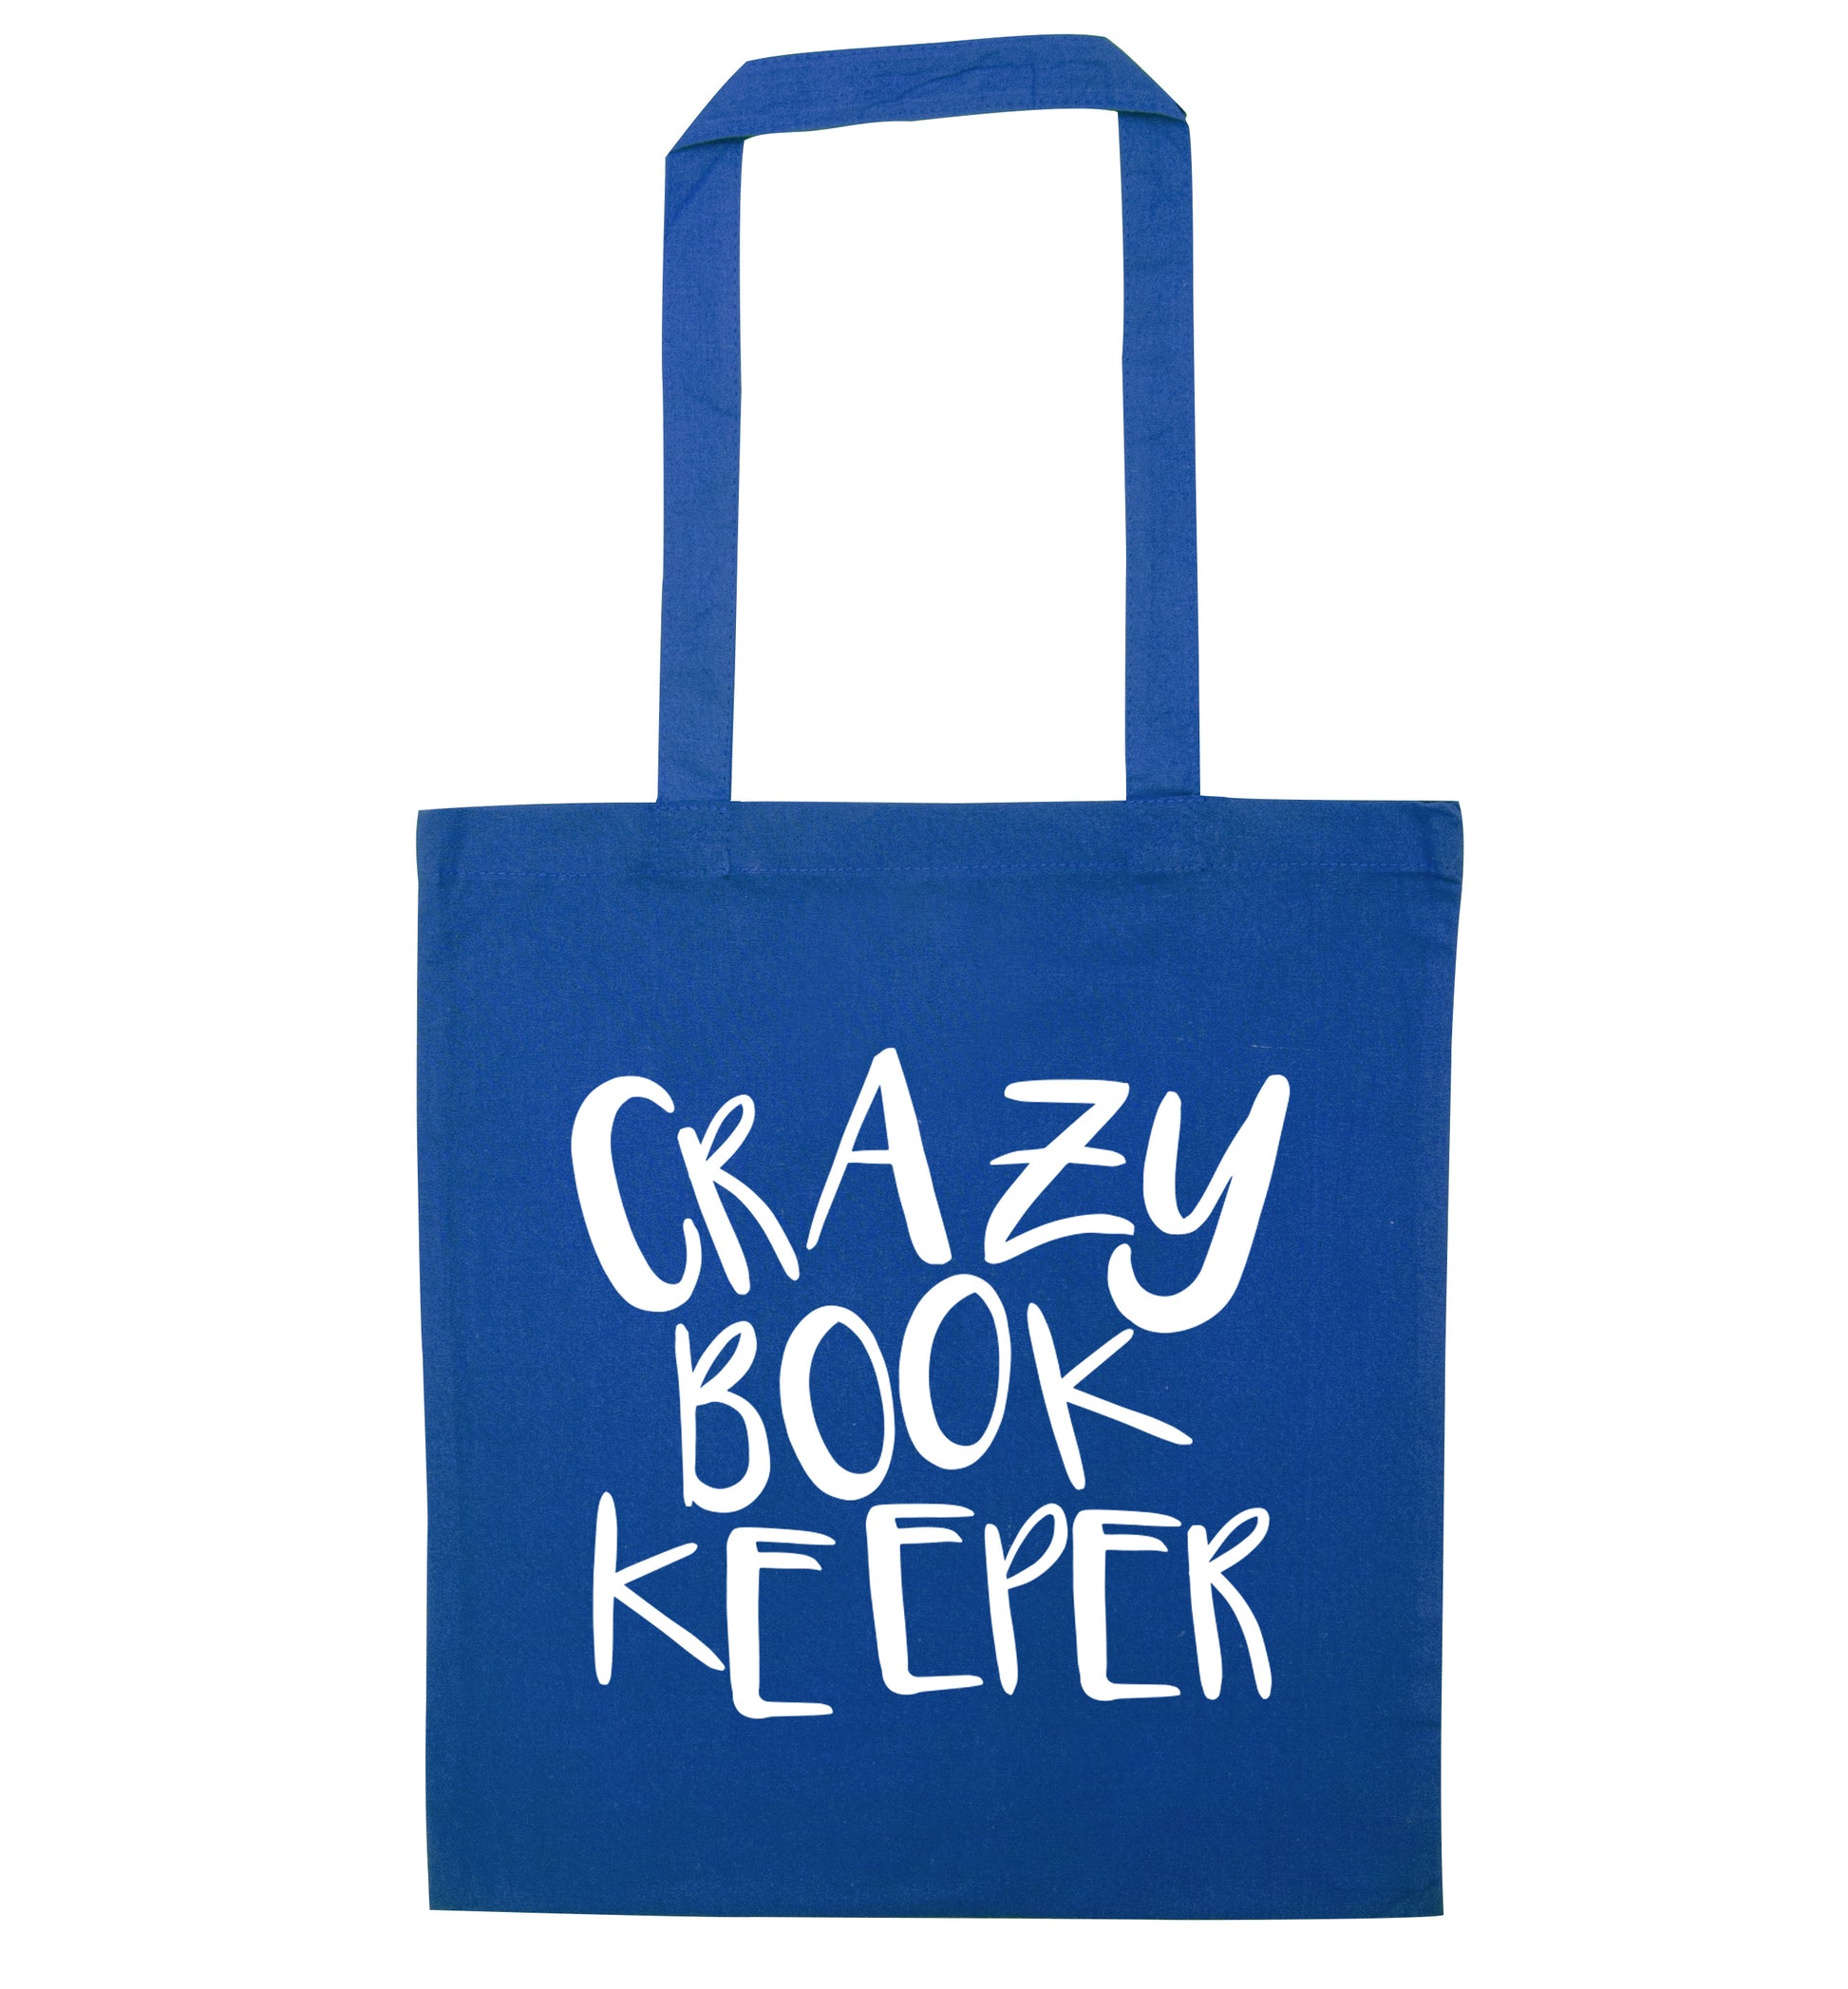 Crazy bookkeeper blue tote bag